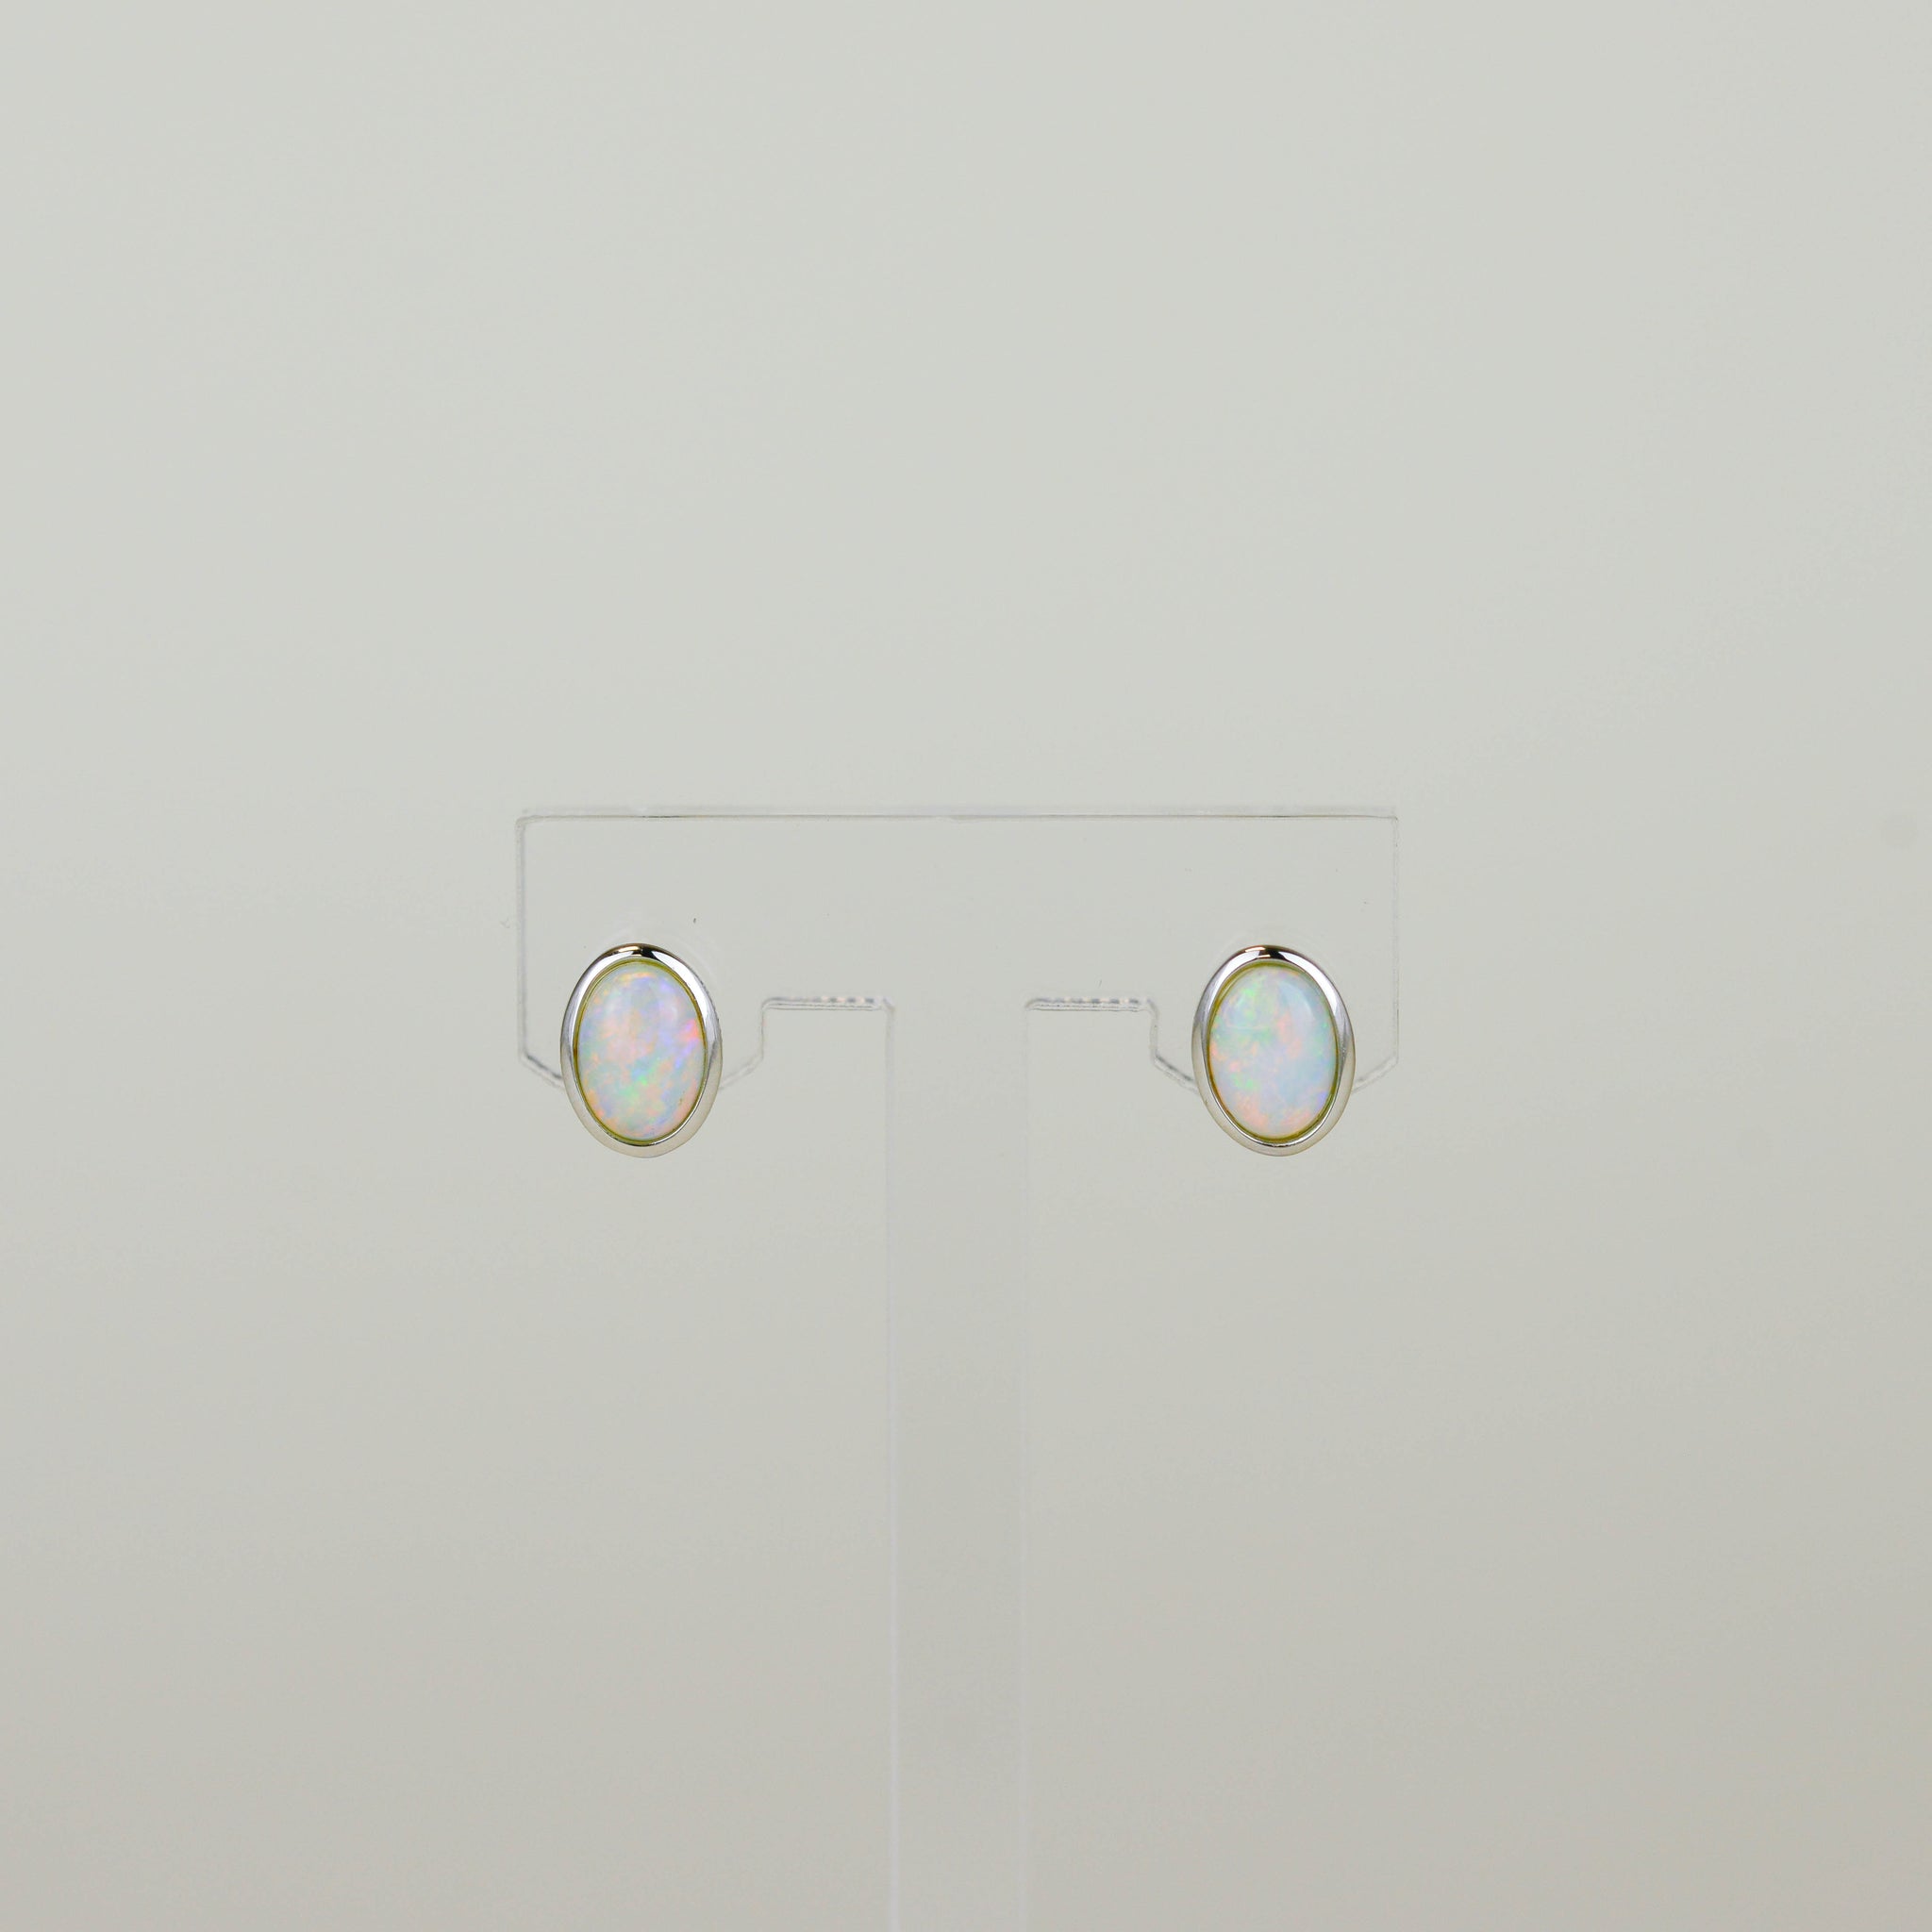 9ct White Gold 0.96ct Rub Set Oval Opal Stud Earrings